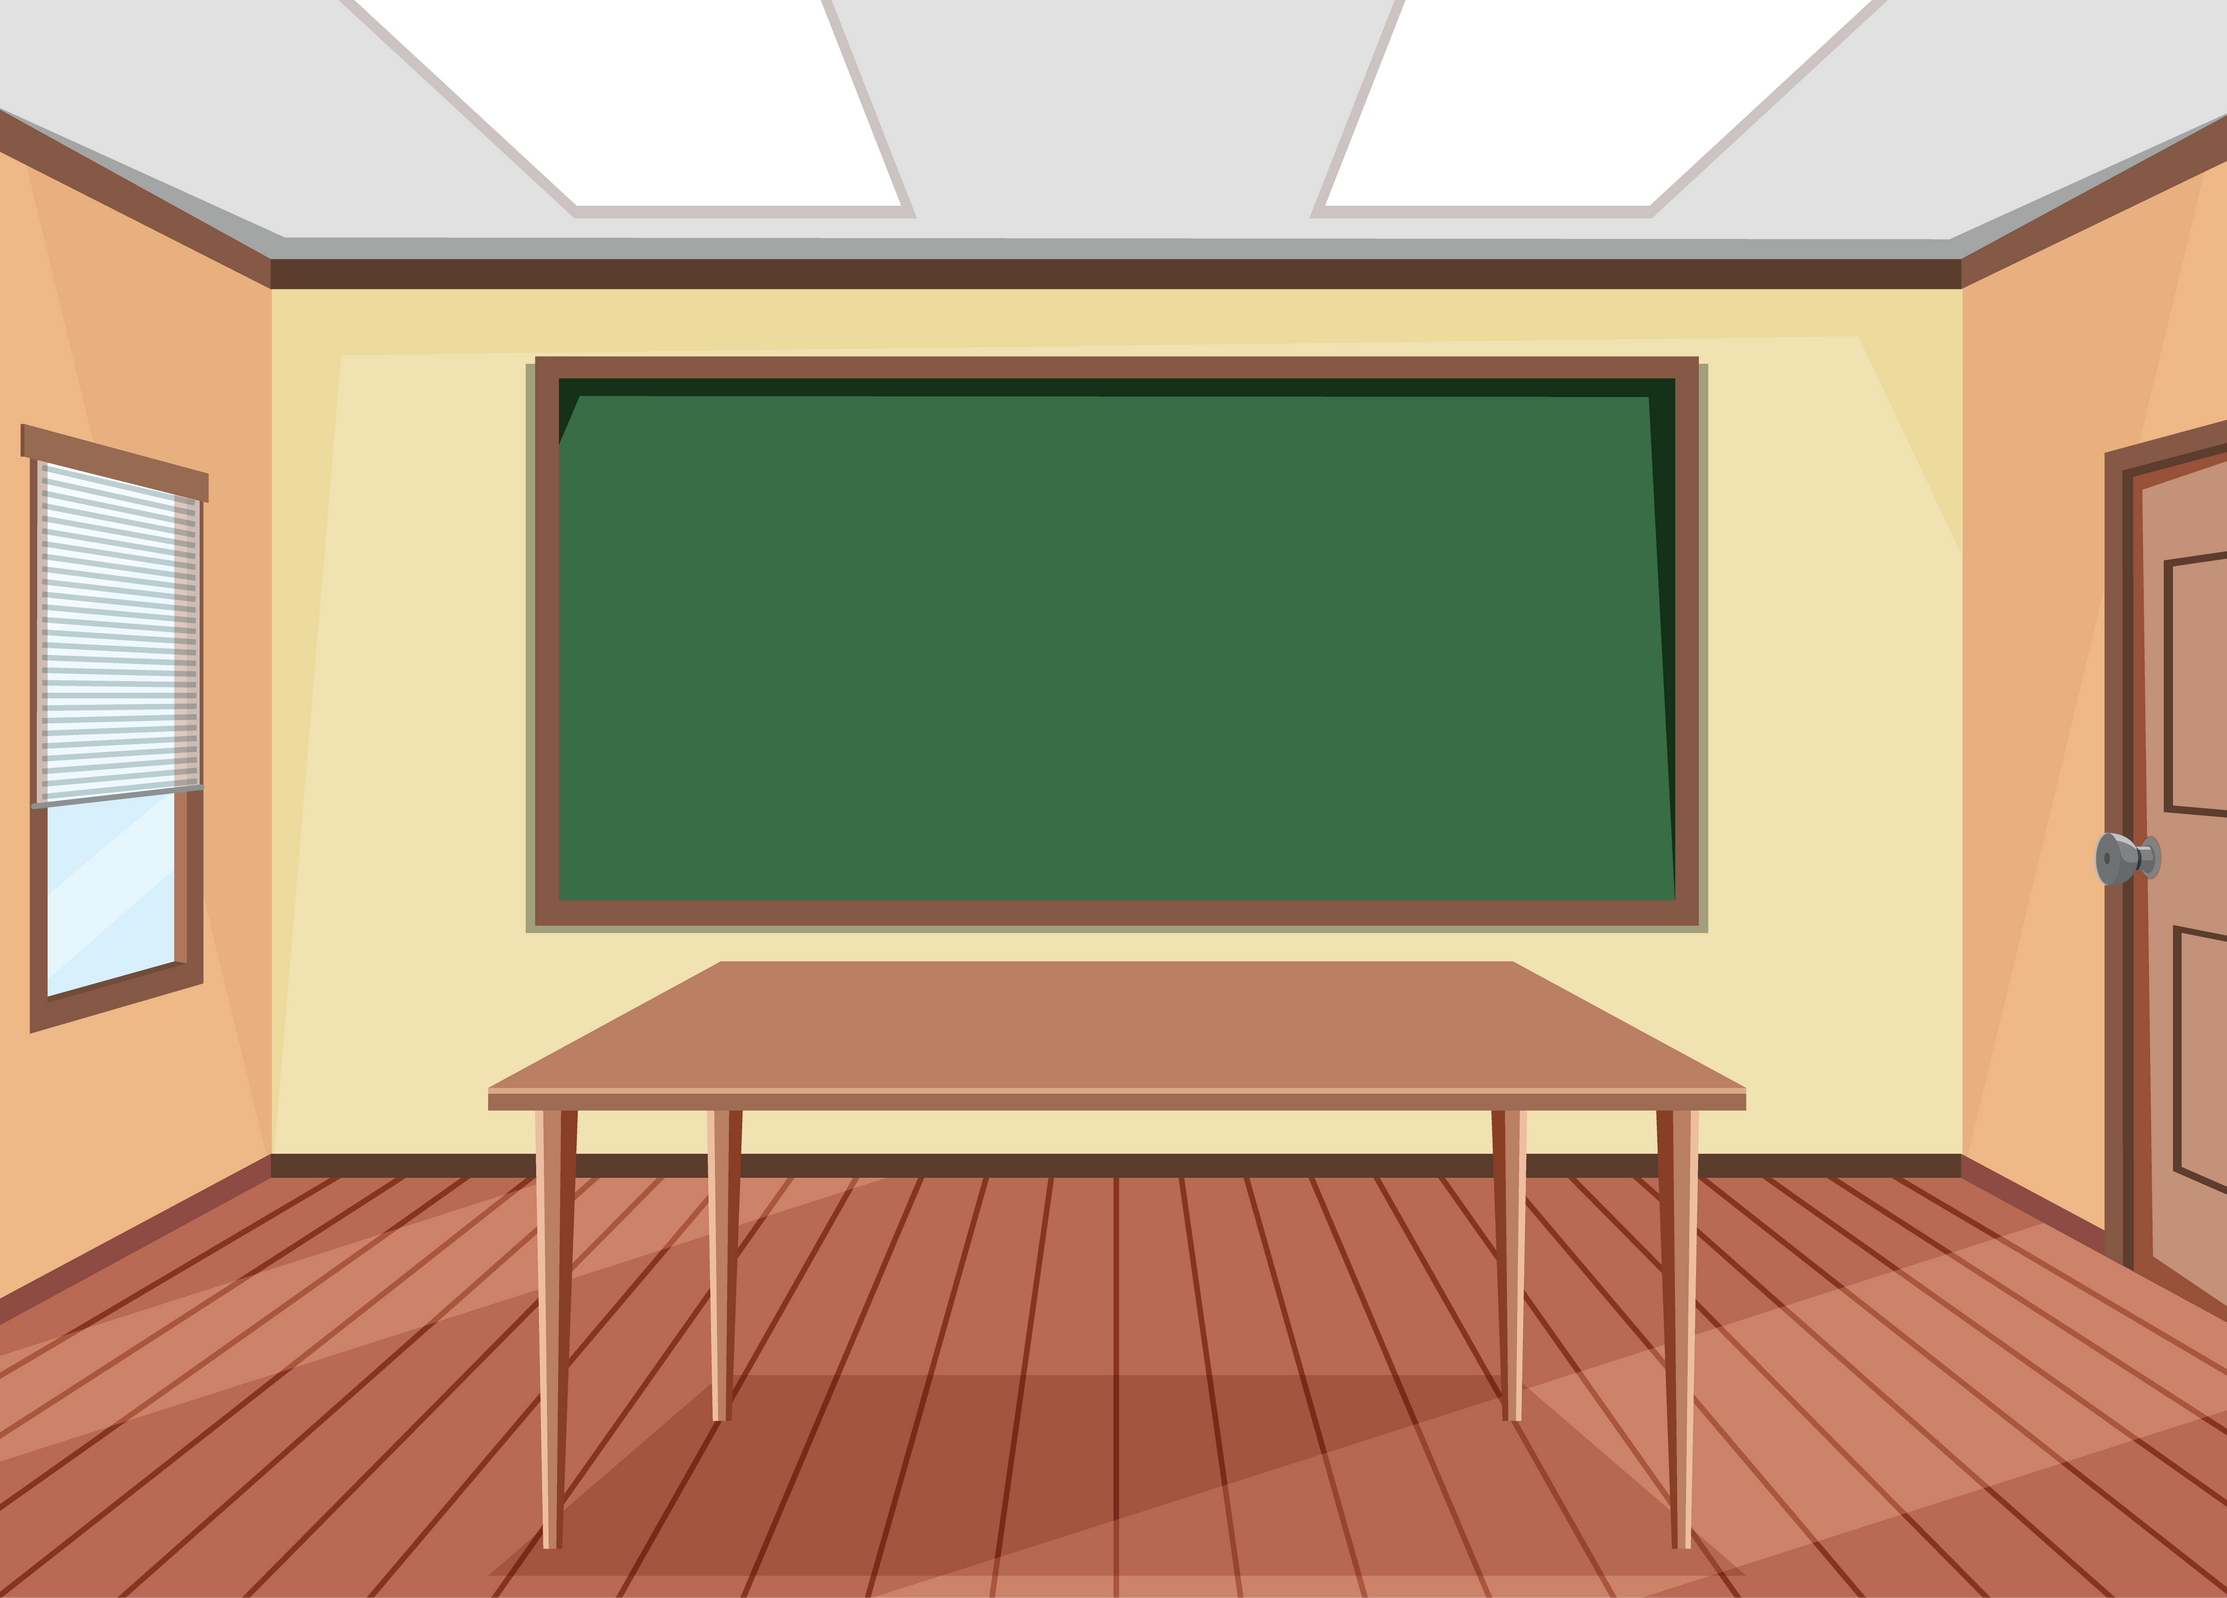 Empty classroom interior design with blackboard